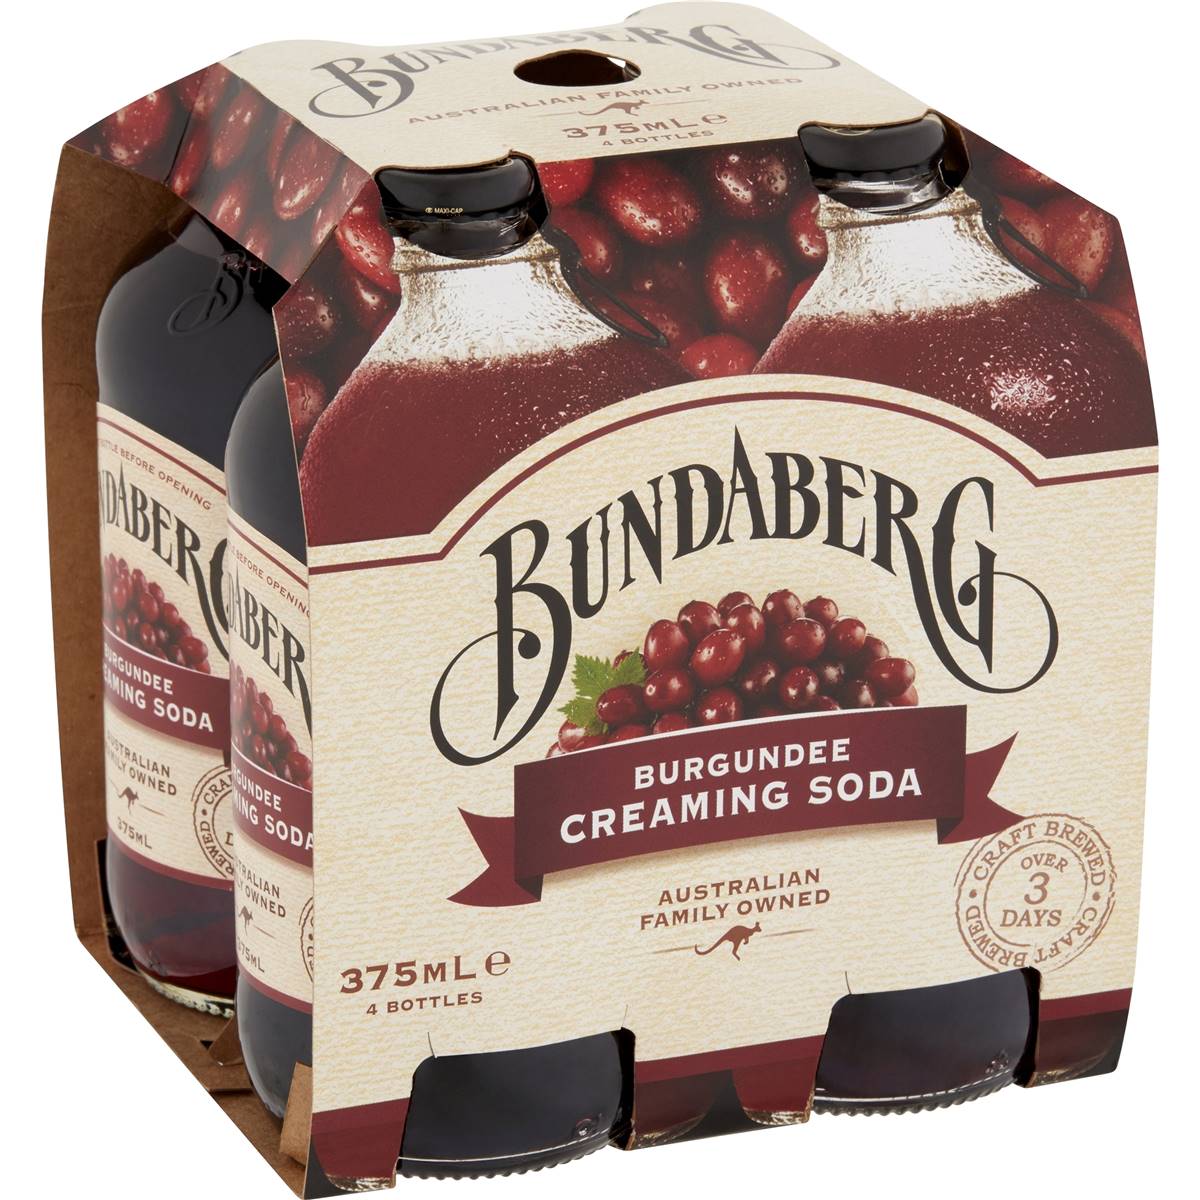 Bundaberg Burgundee Creaming Soda 375ml